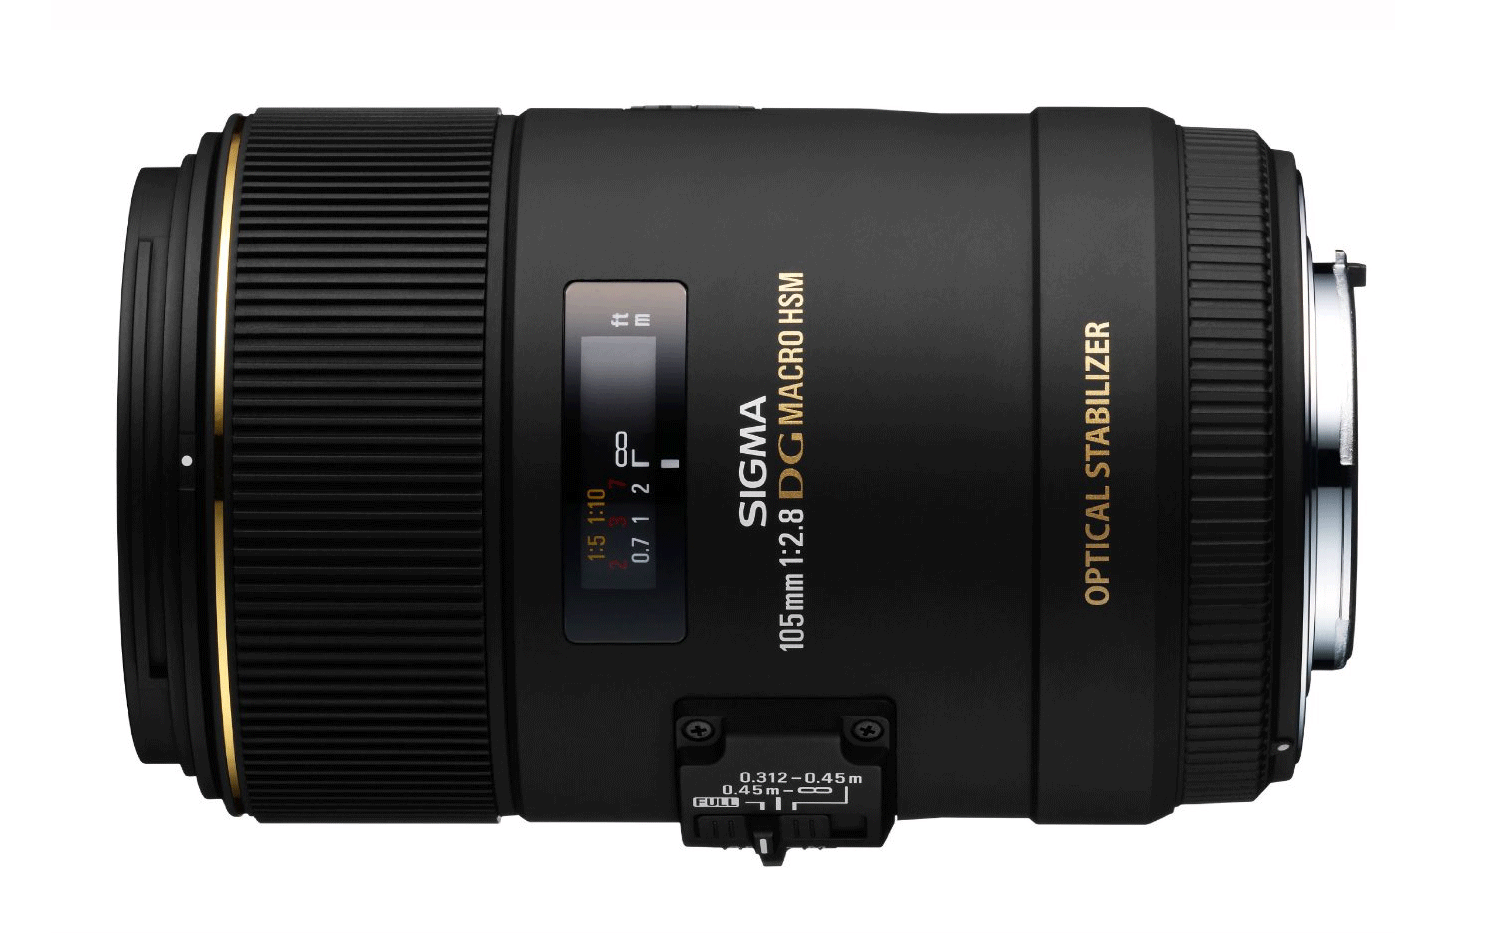 Hot Deal: Sigma 105mm F2.8 EX DG OS HSM Macro Lens for $469 - Lens Rumors